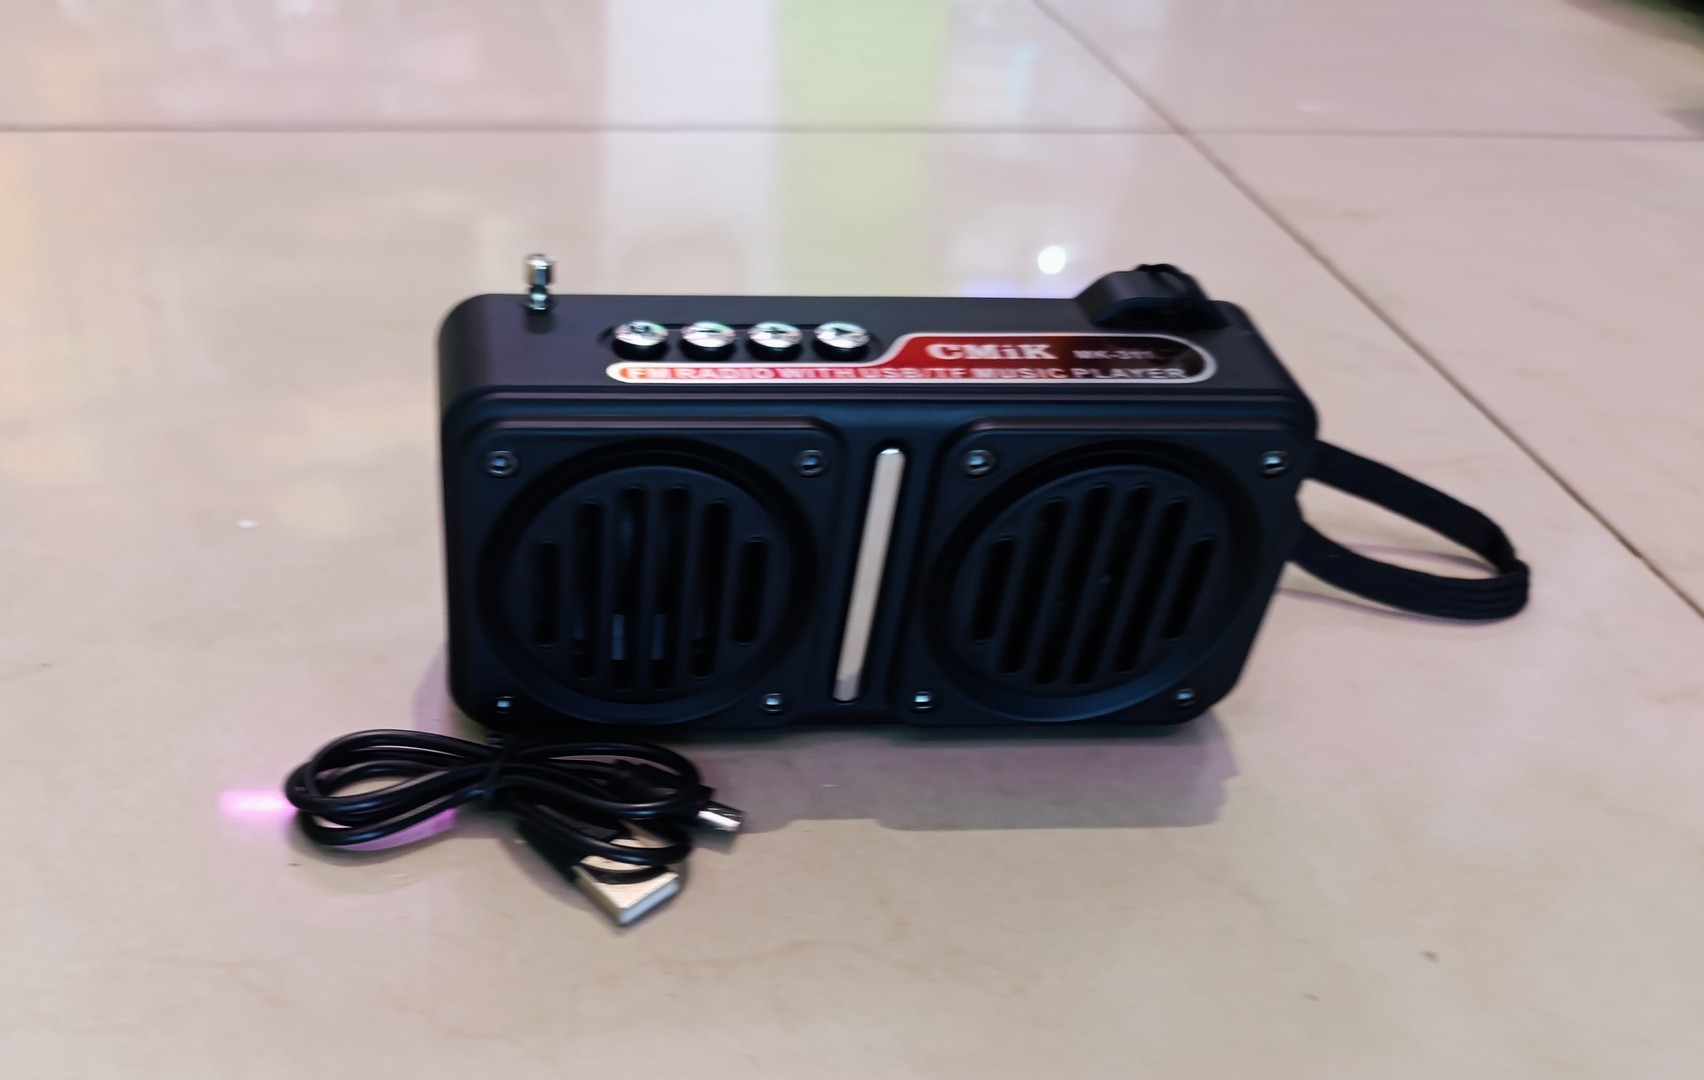 camaras y audio - Radio MK-311, emisora,  4